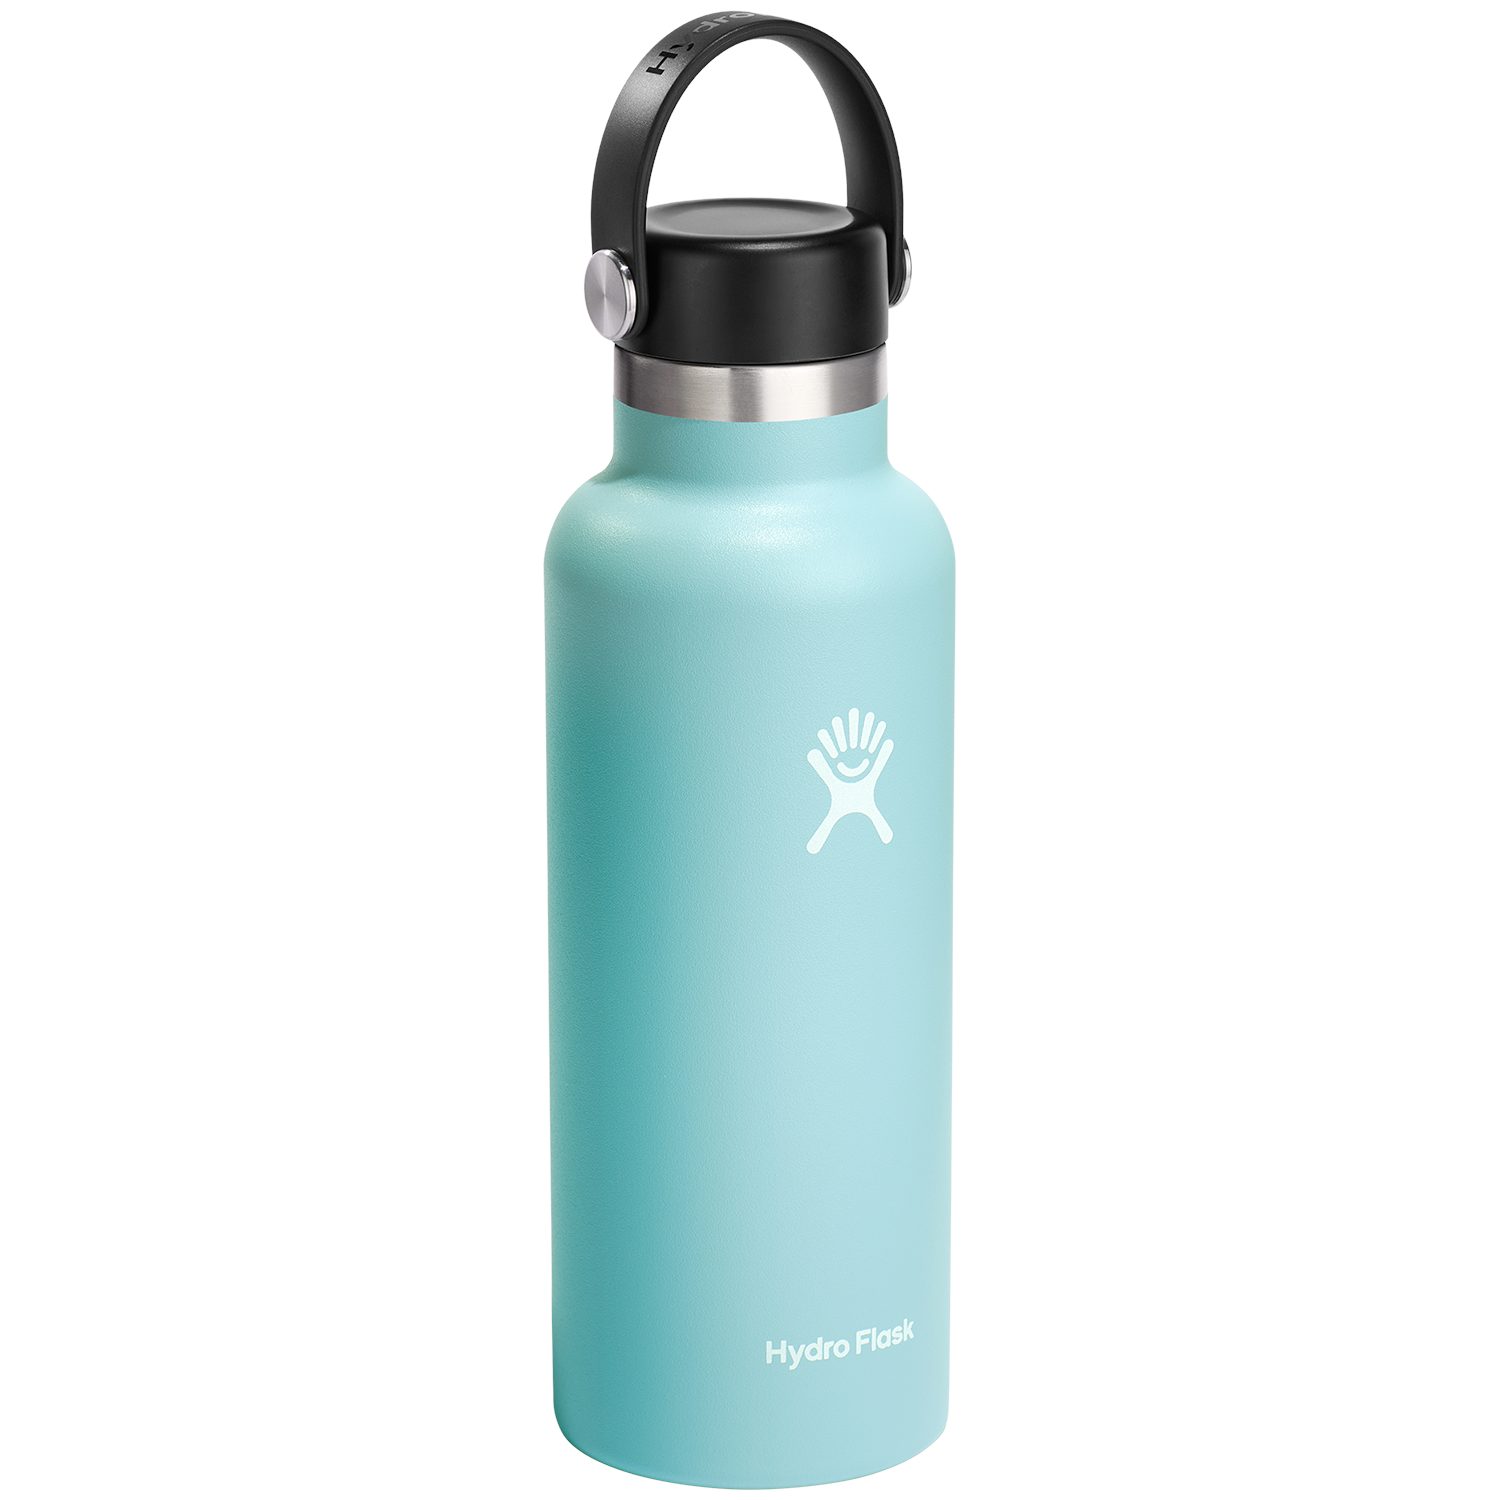 https://images.evo.com/imgp/zoom/167436/997836/hydro-flask-18oz-standard-mouth-water-bottle-.jpg